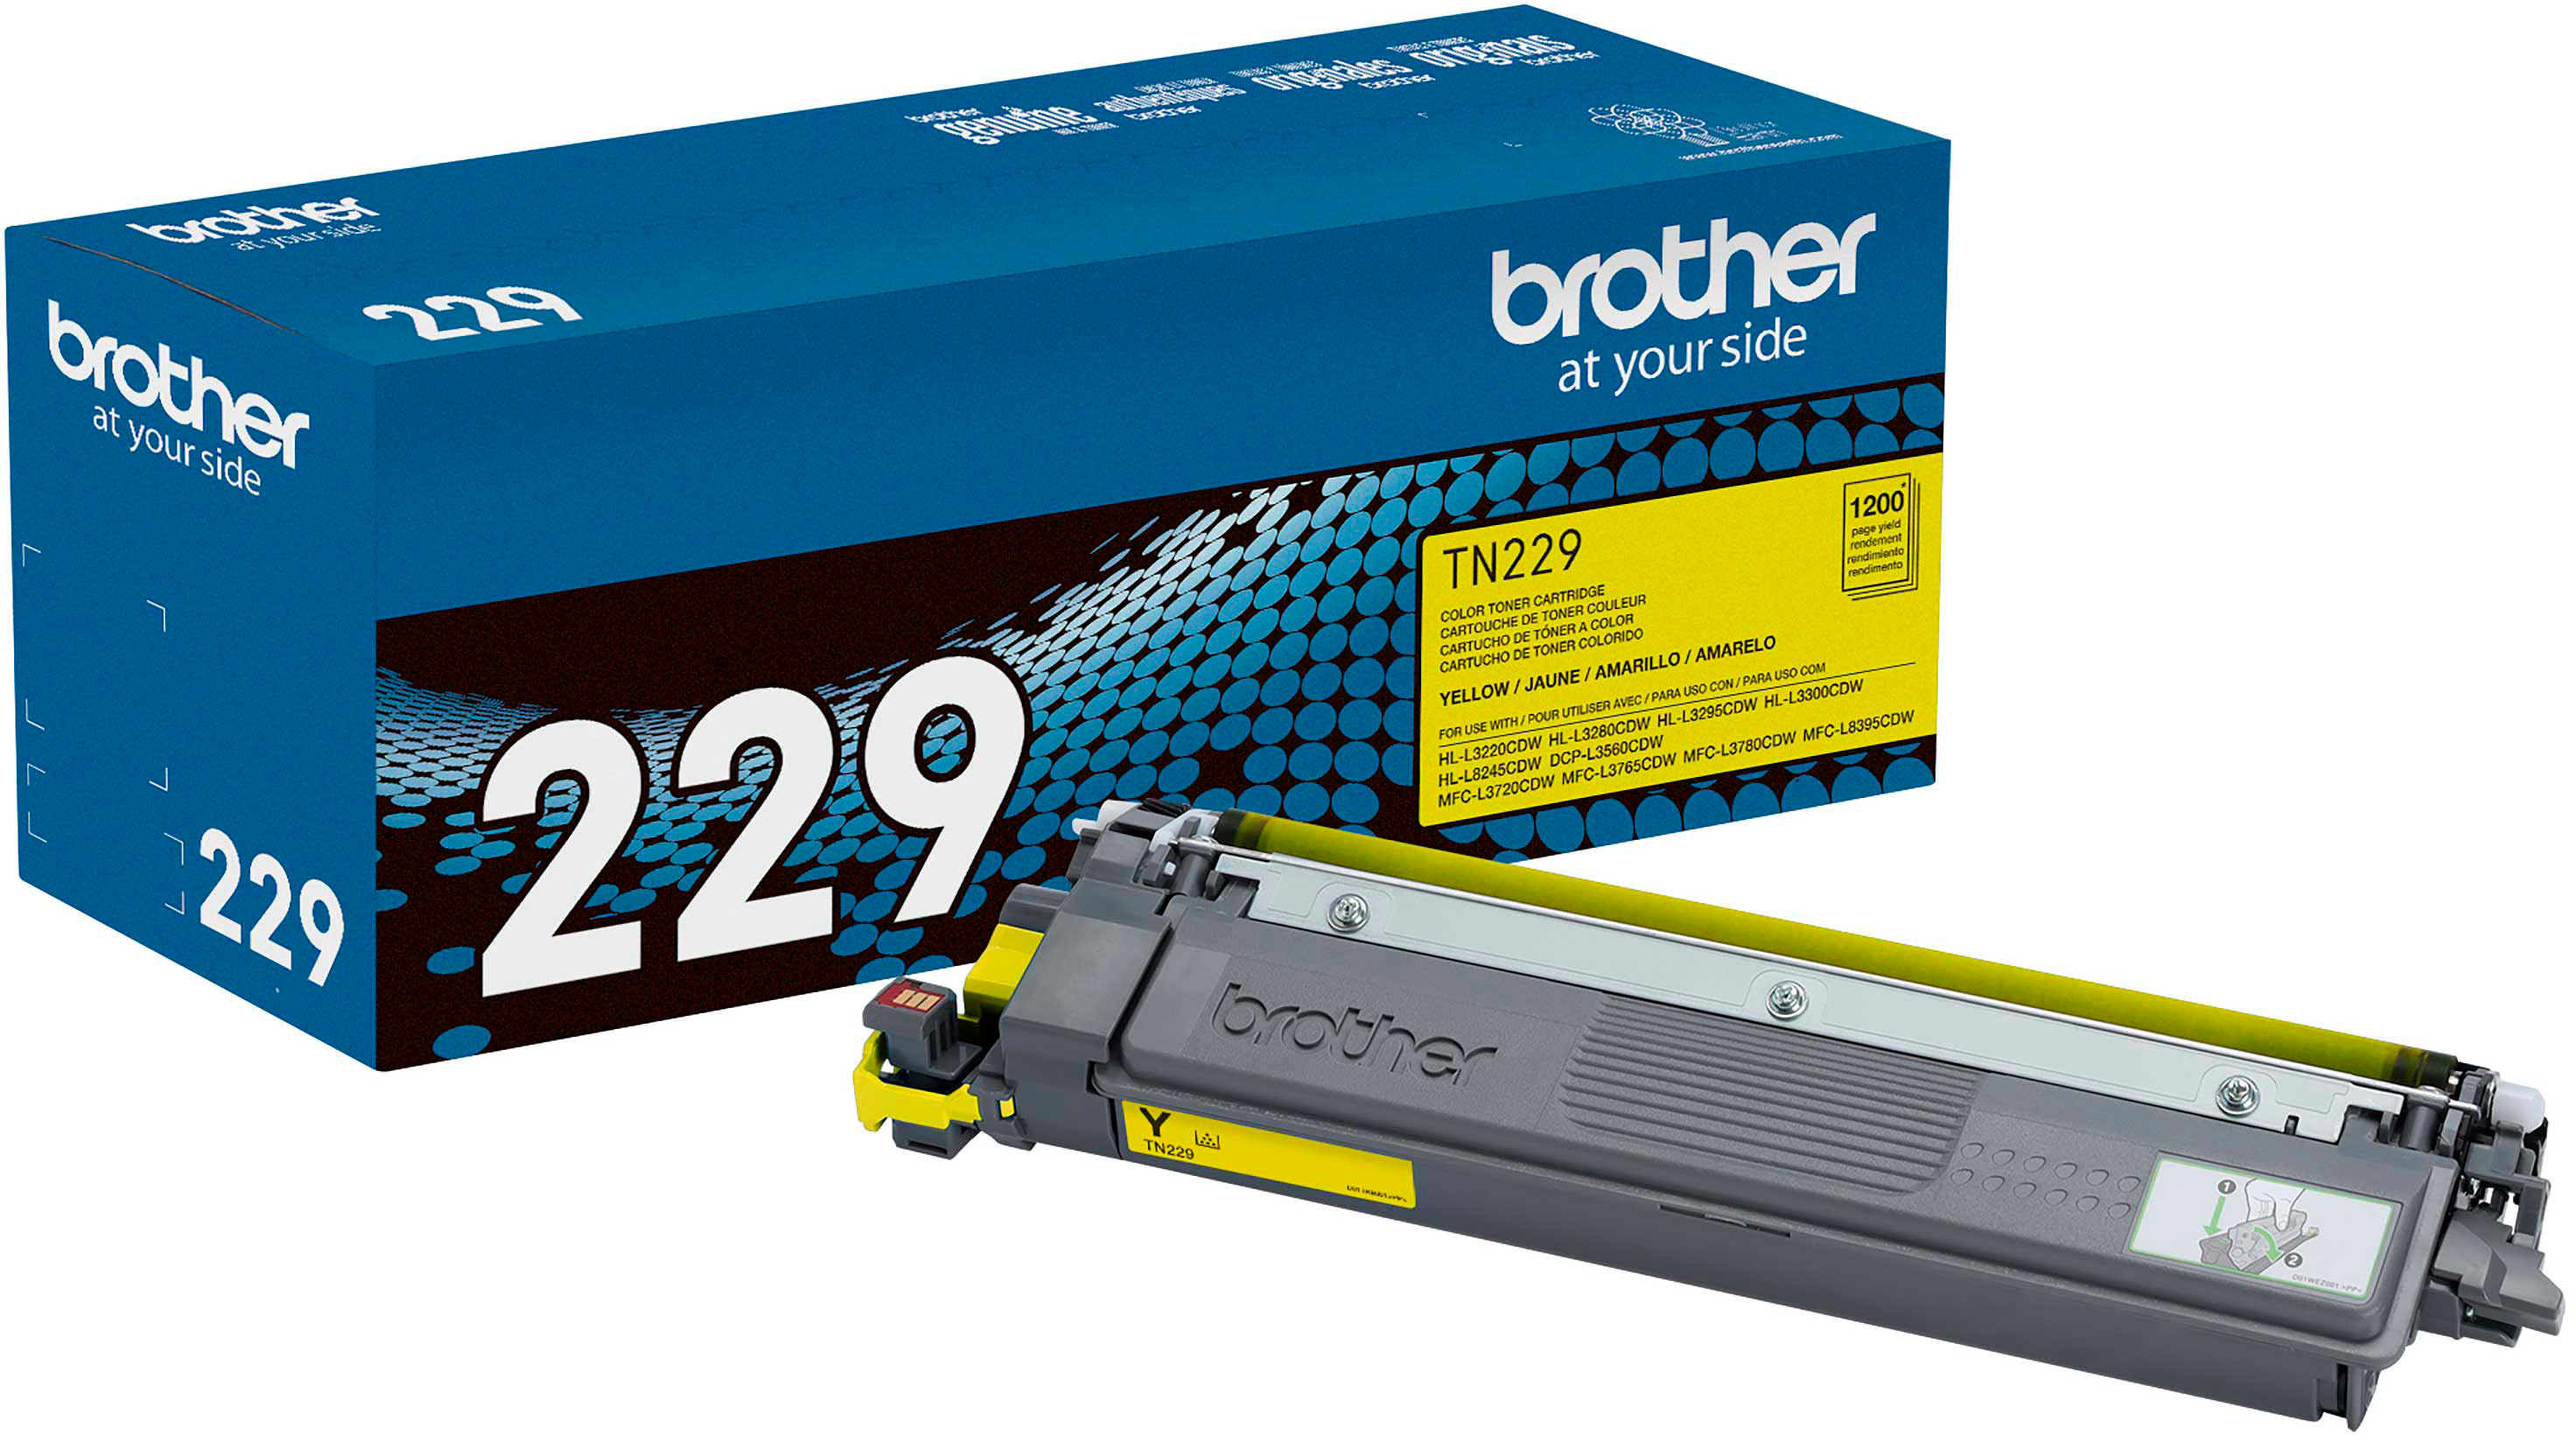 Brother TN 423 Yellow Compatible High Capacity Toner Cartridge